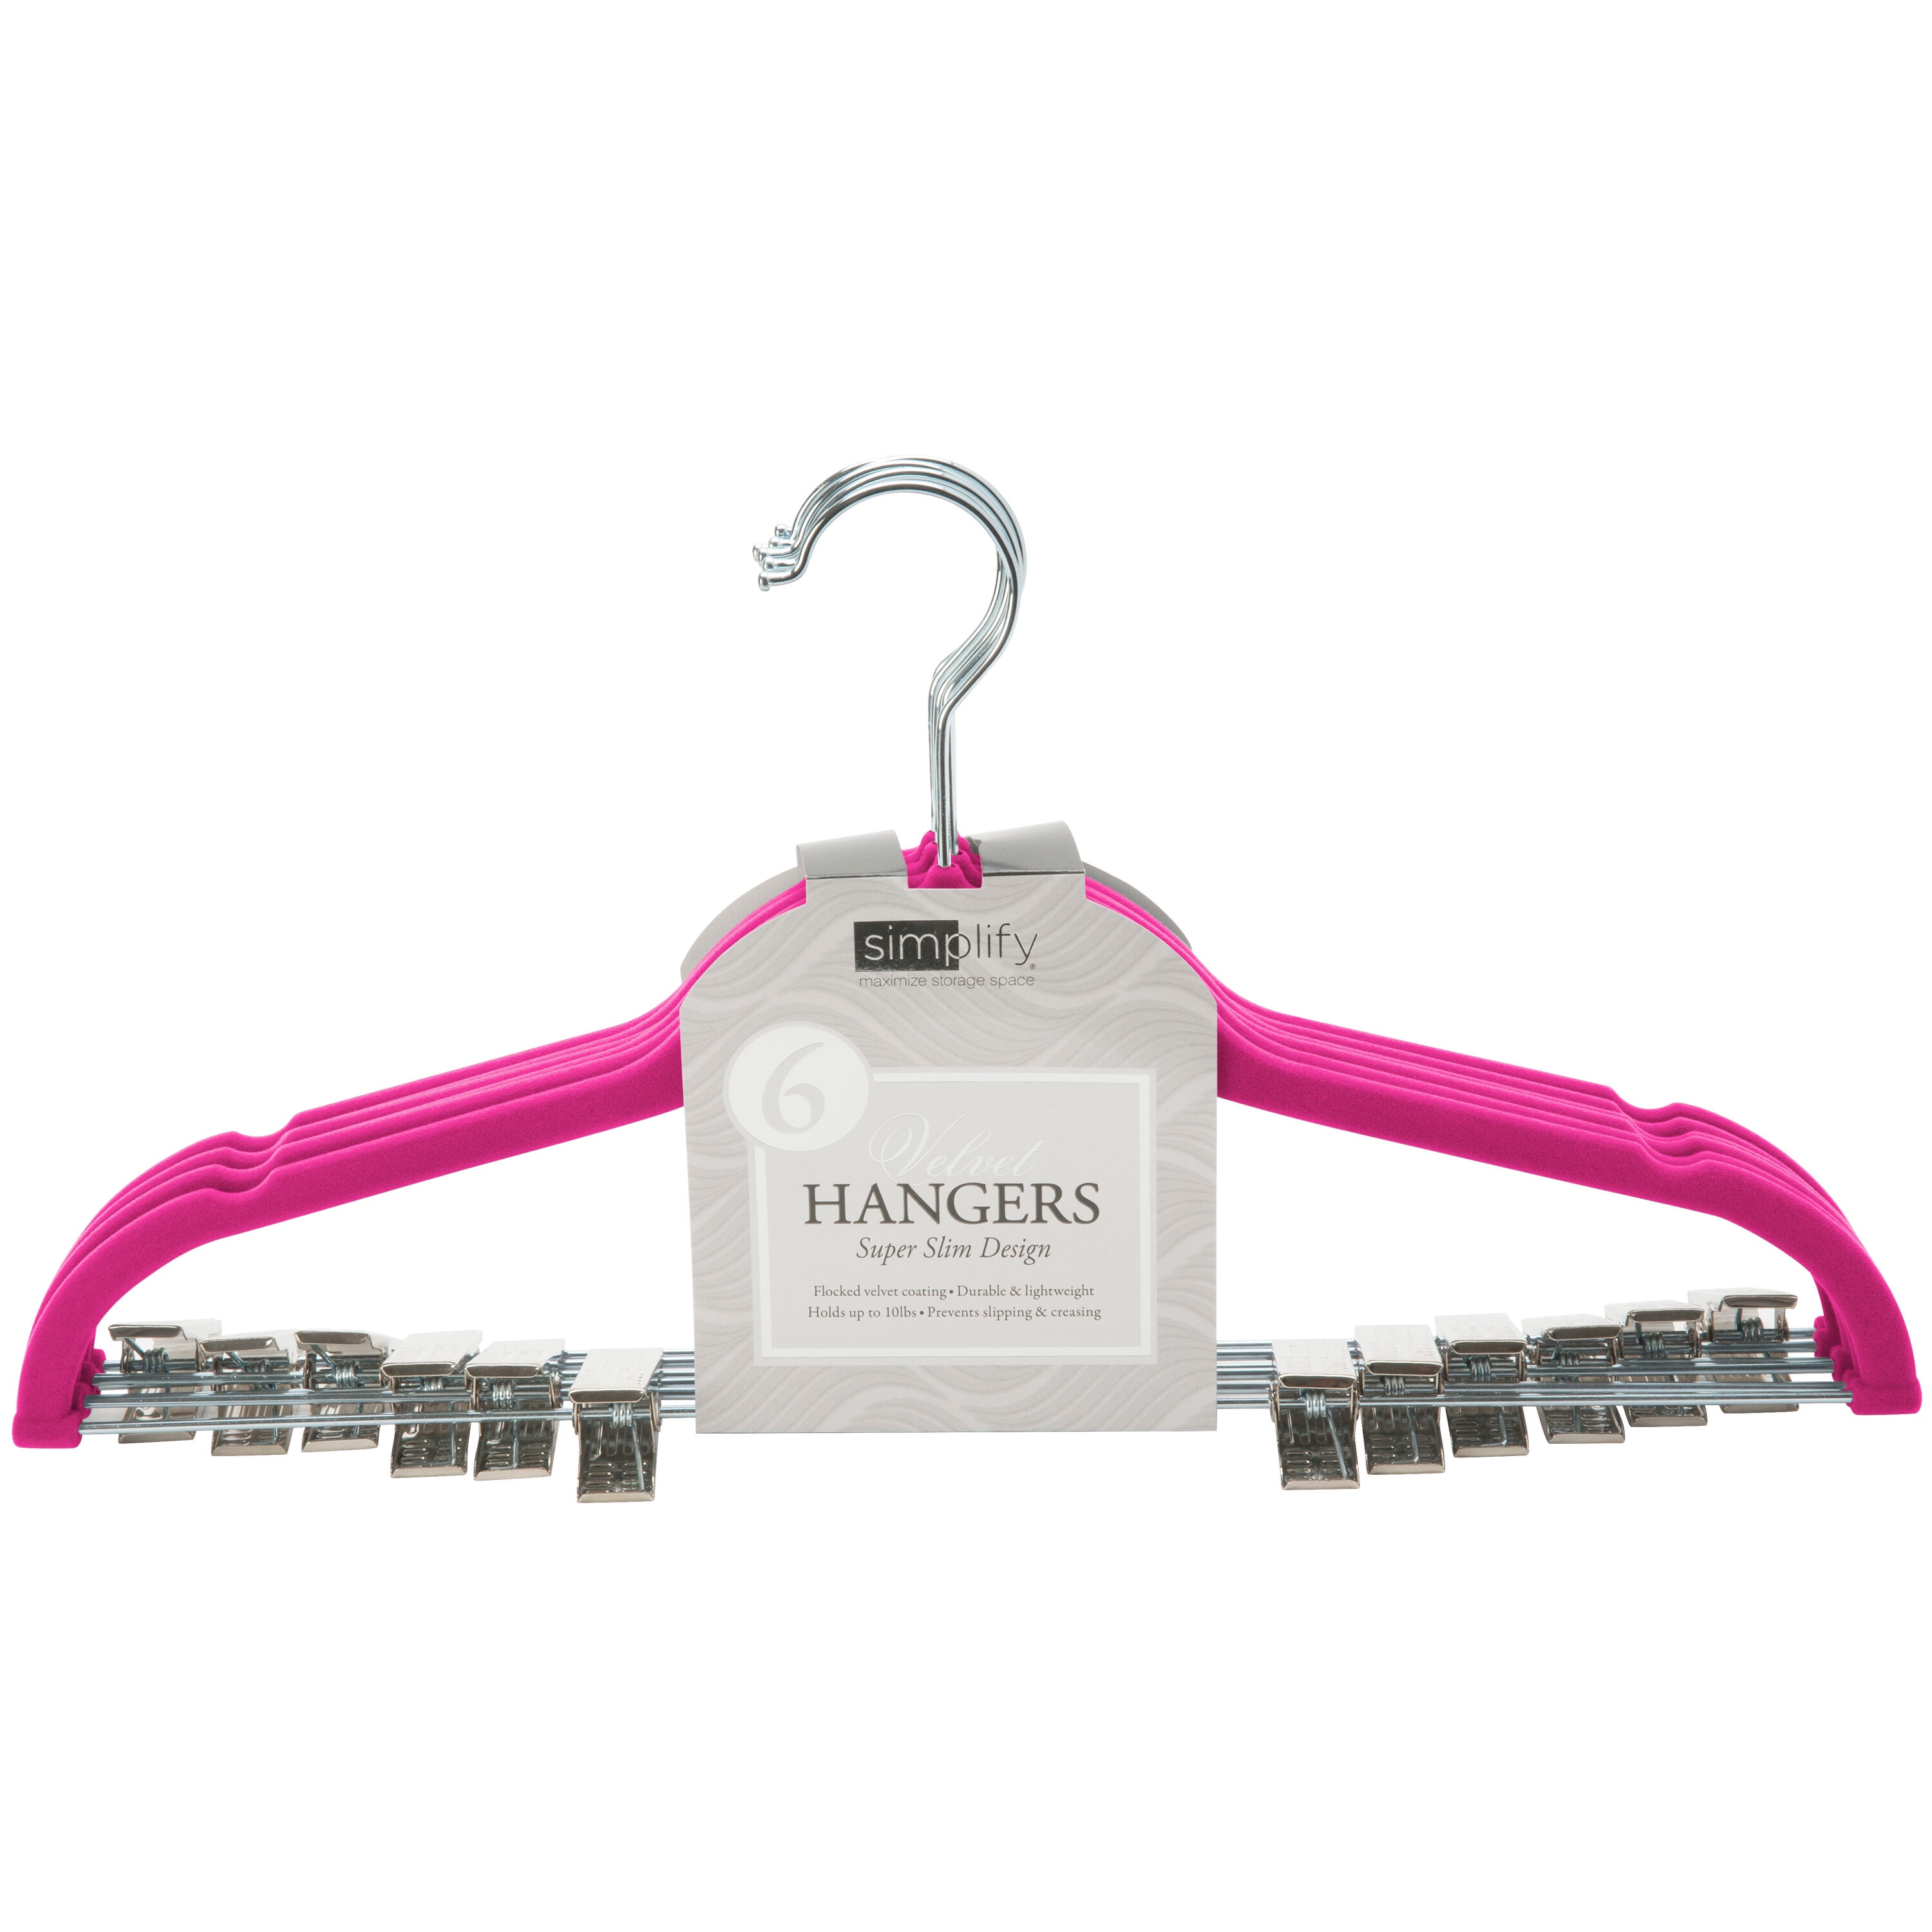 Wholesale Wholesale pink wood clothes shirts hangers wooden children suit  hanger Manufacturer and Supplier